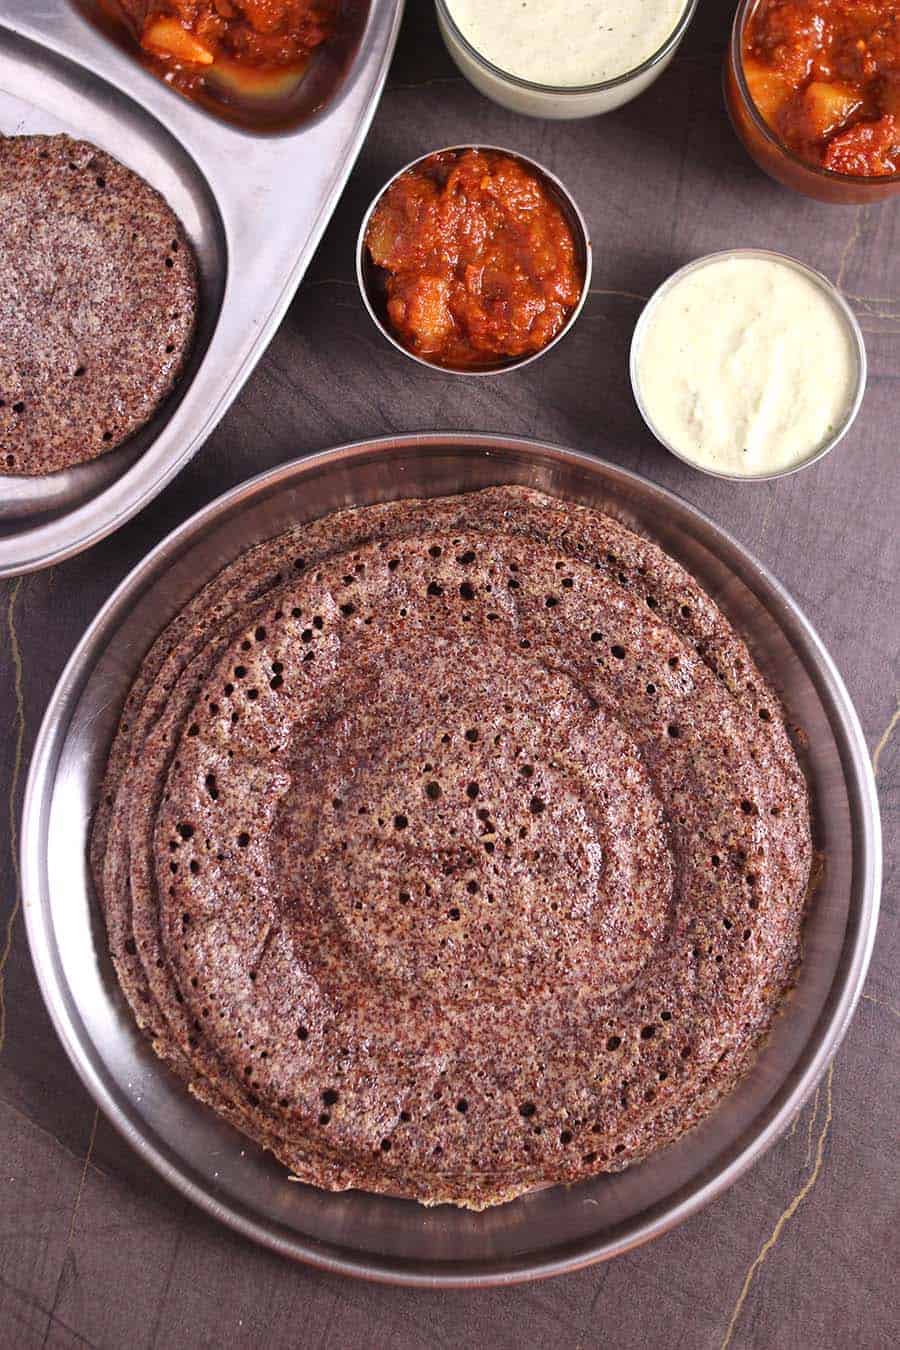 ragi dosa, raagi dose, how to make ragi dosa batter without rice, healthy Indian breakfast recipes